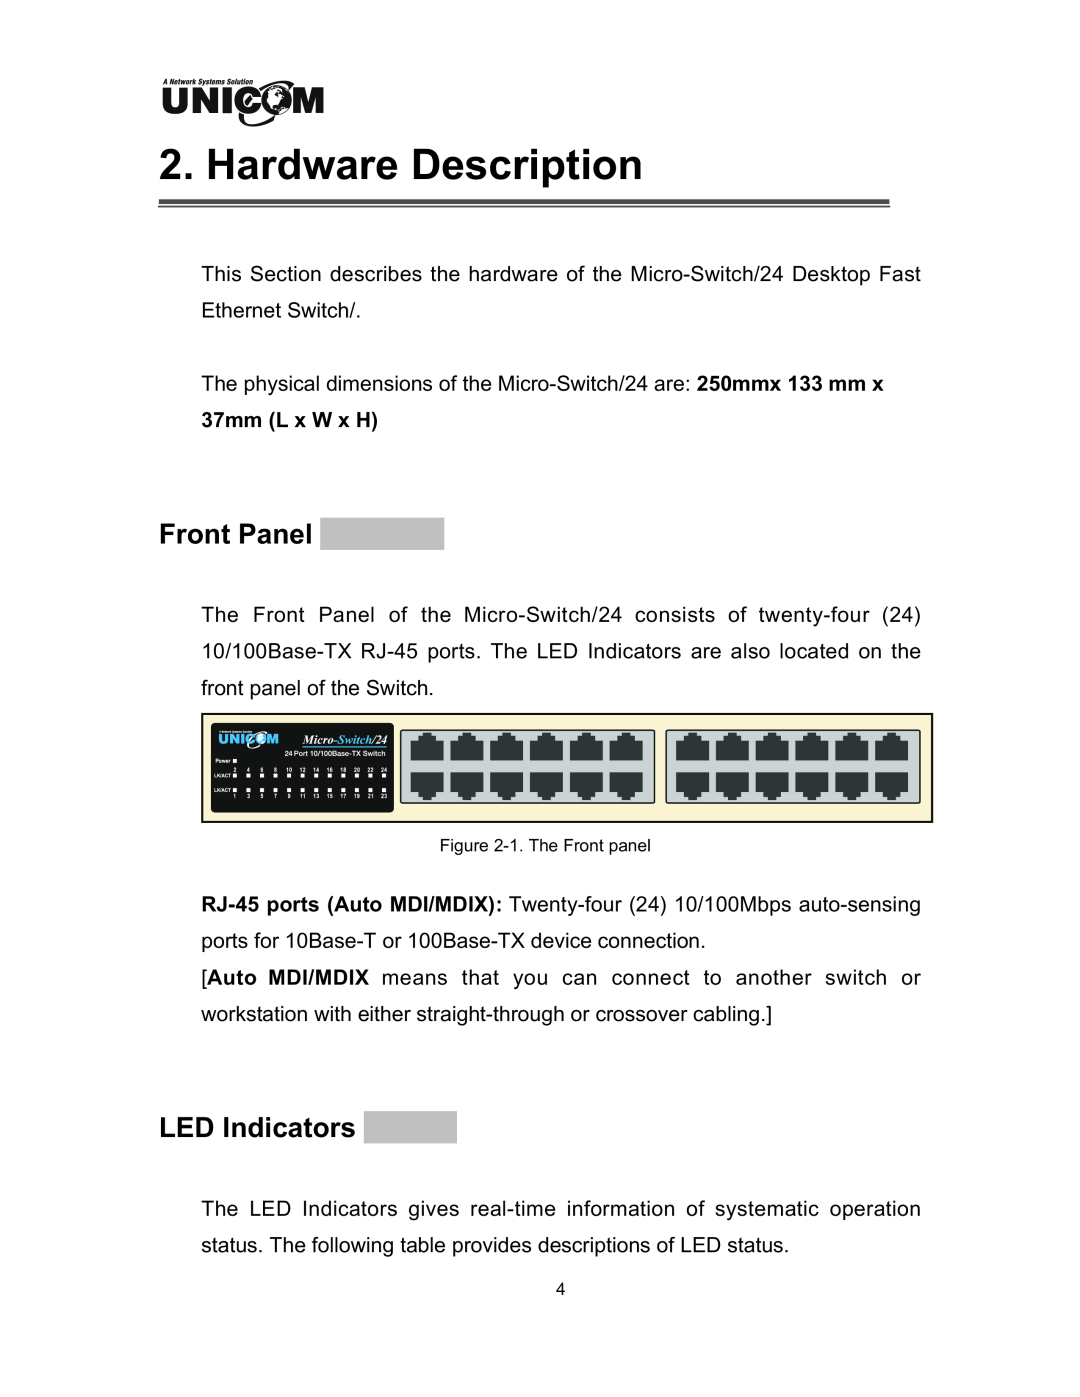 UNICOM Electric FEP-32024T specifications Hardware Description, Front Panel, LED Indicators 